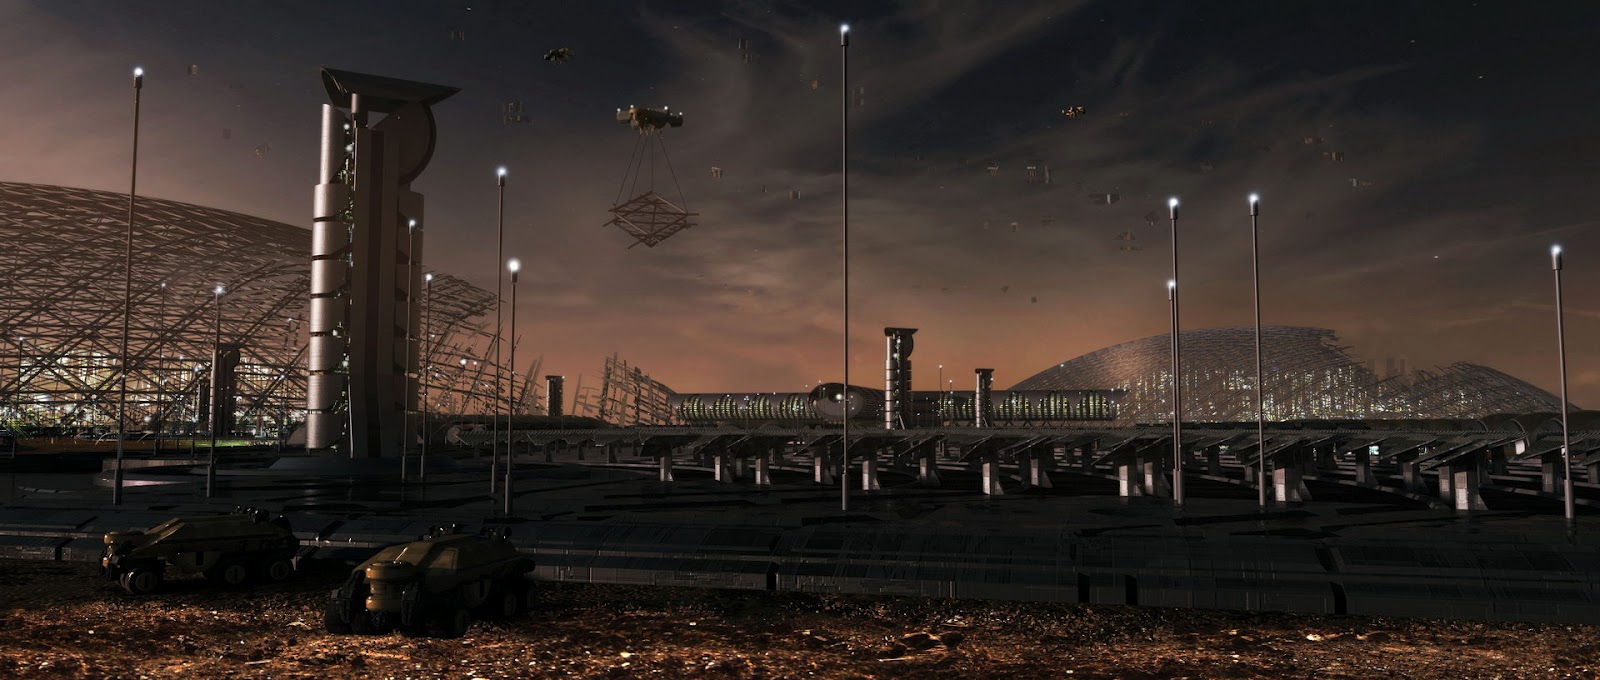 Weyland_Mars_Facility_Steve_Burg